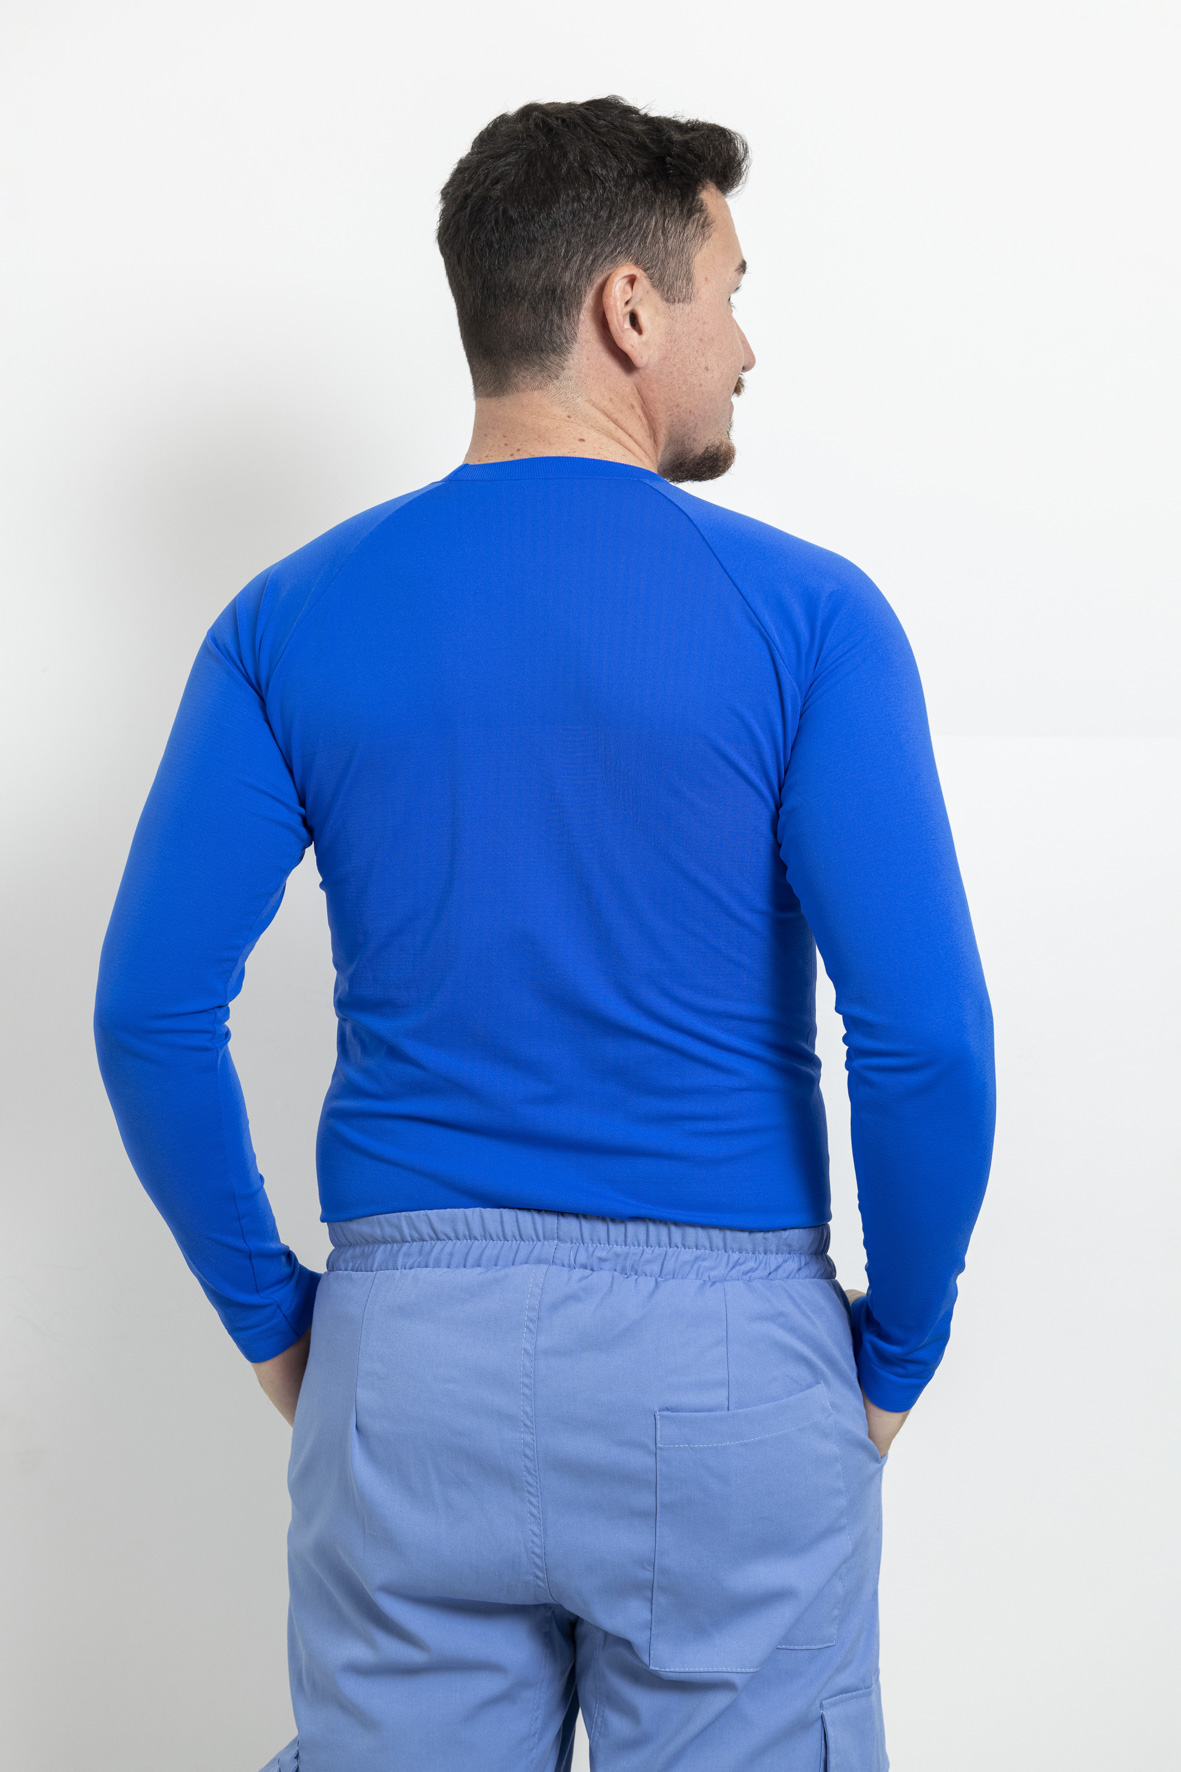 Camiseta térmica azul (hombre) - Oh! Wear